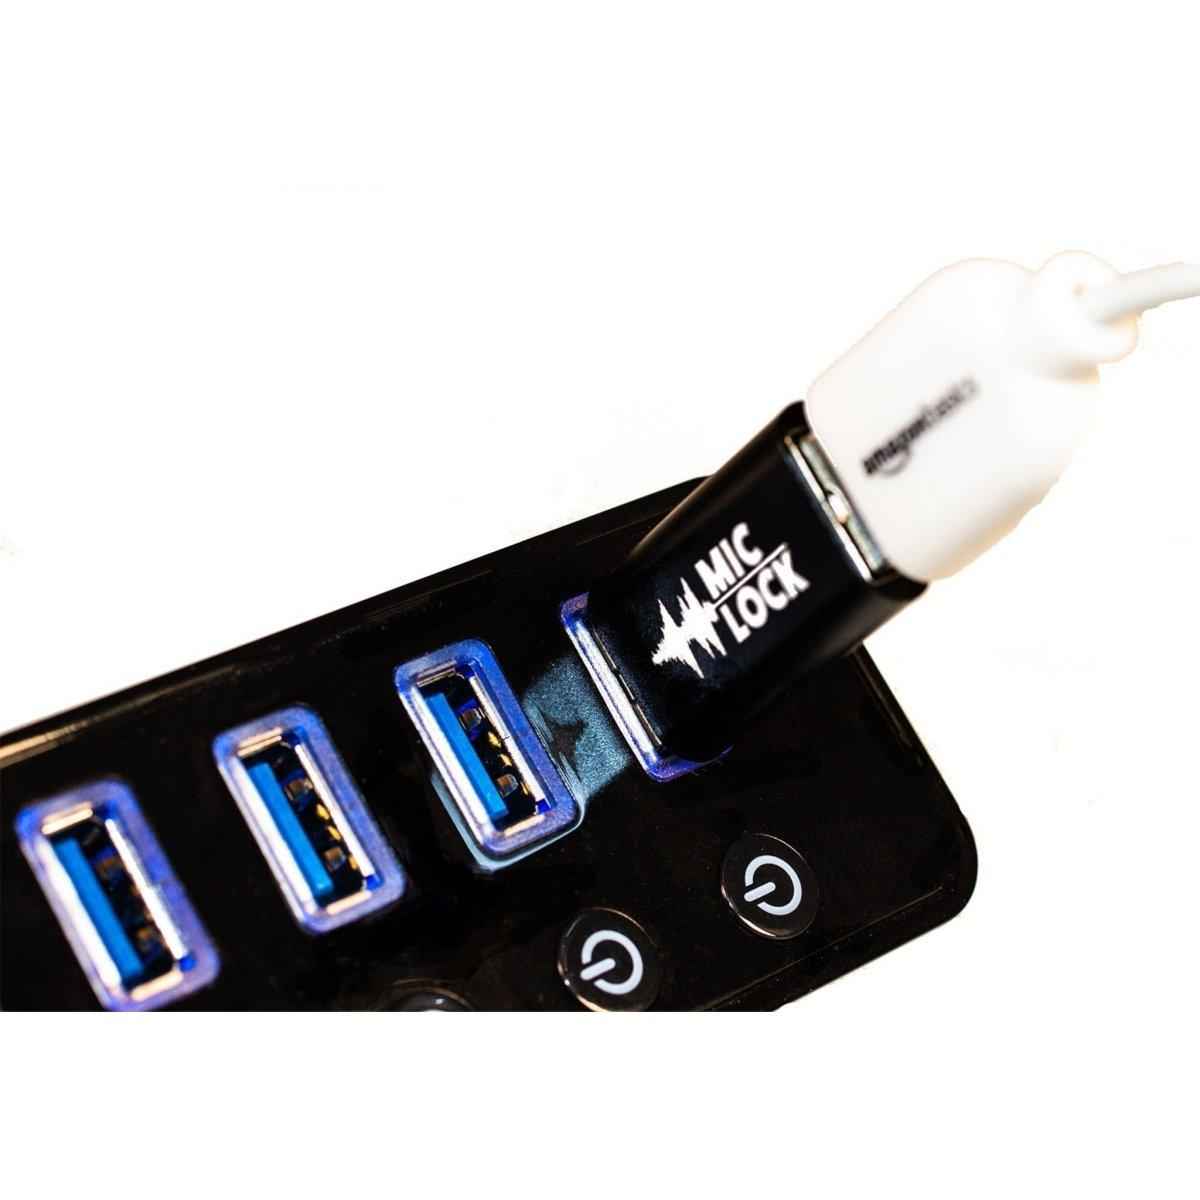 Mic-Lock USB Secure Charge Kit - Mic-Lock